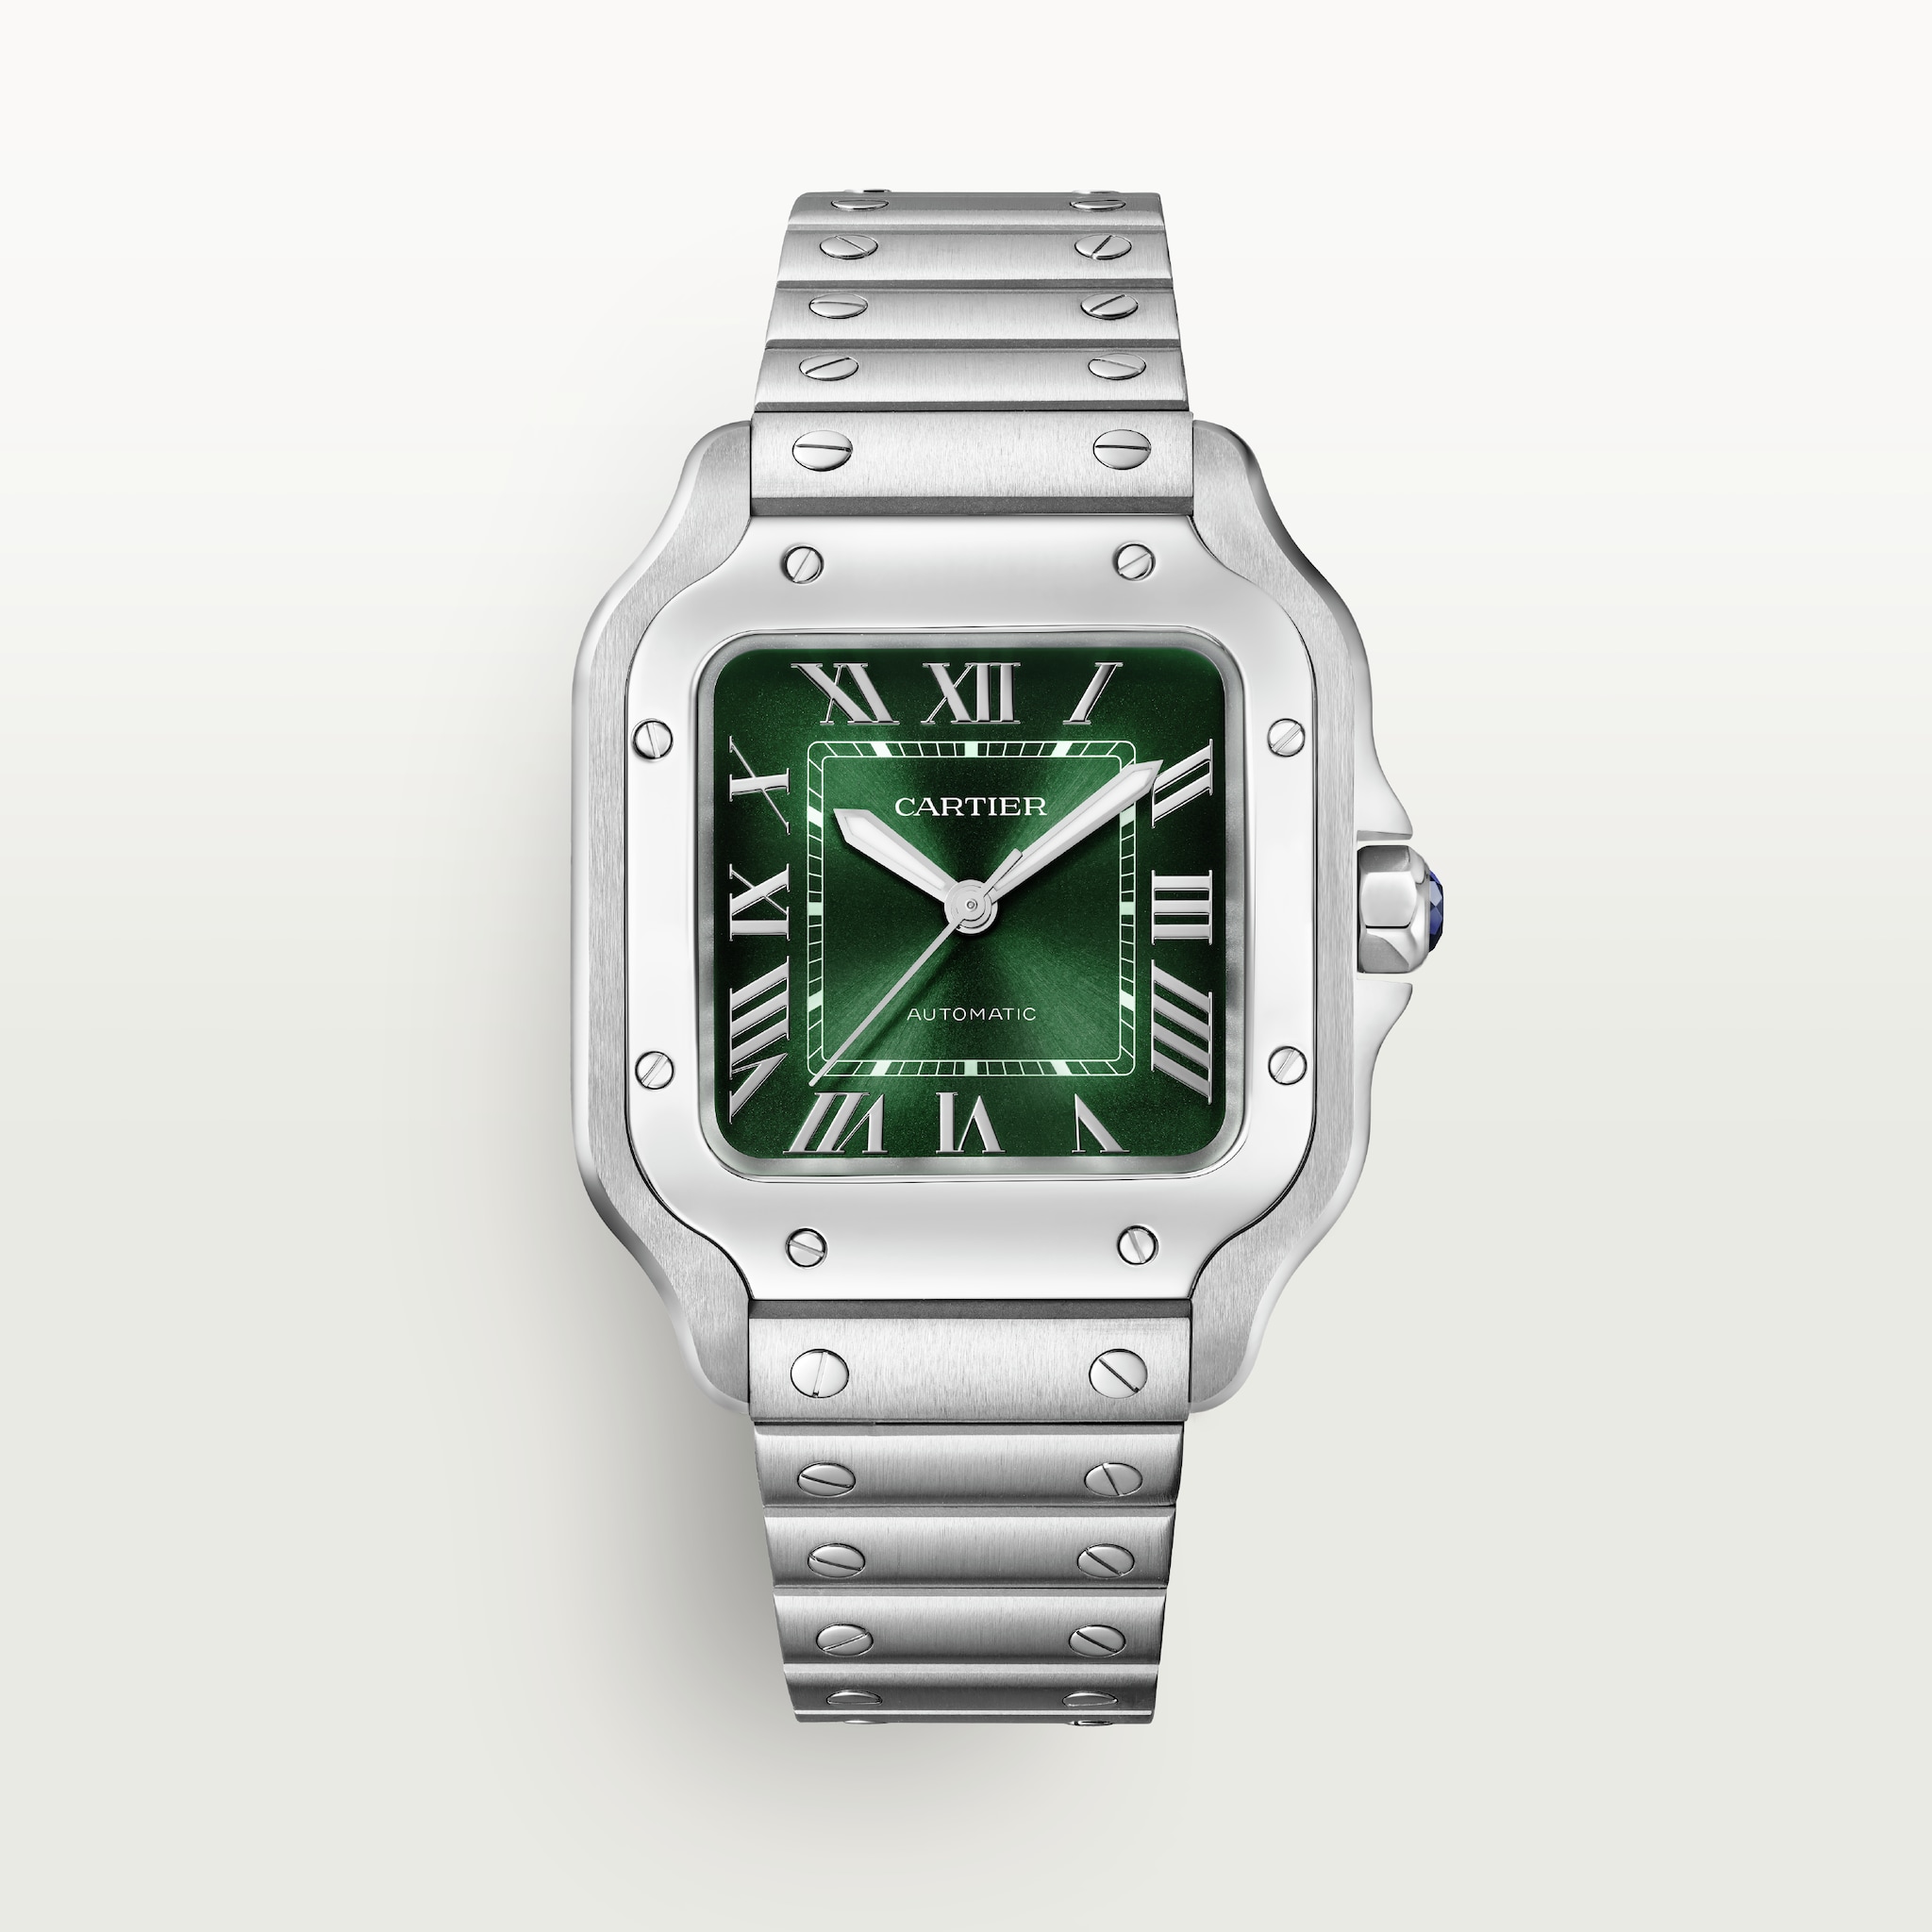 Santos de Cartier watchMedium model, automatic movement, steel, interchangeable metal and leather straps